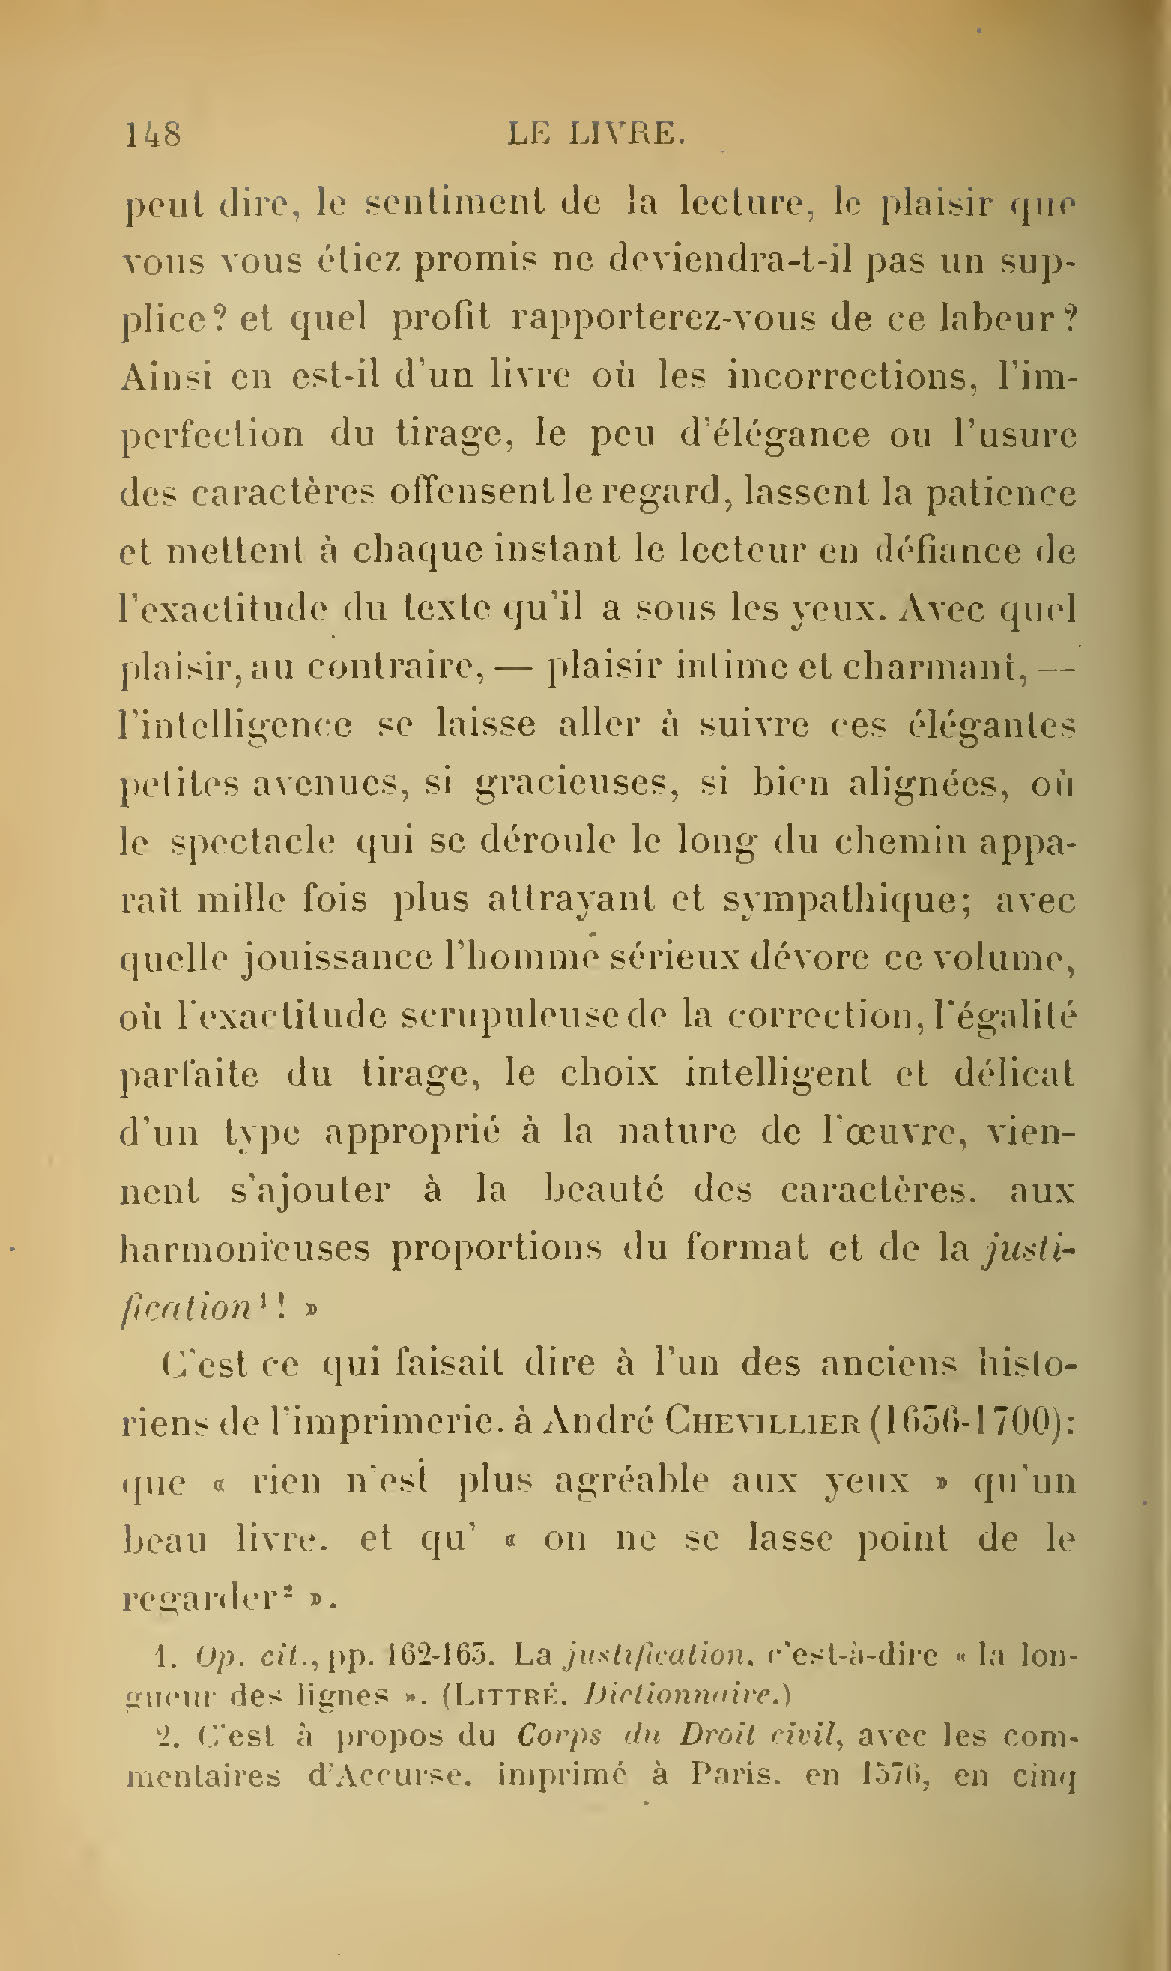 Albert Cim, Le Livre, t. II, p. 148.